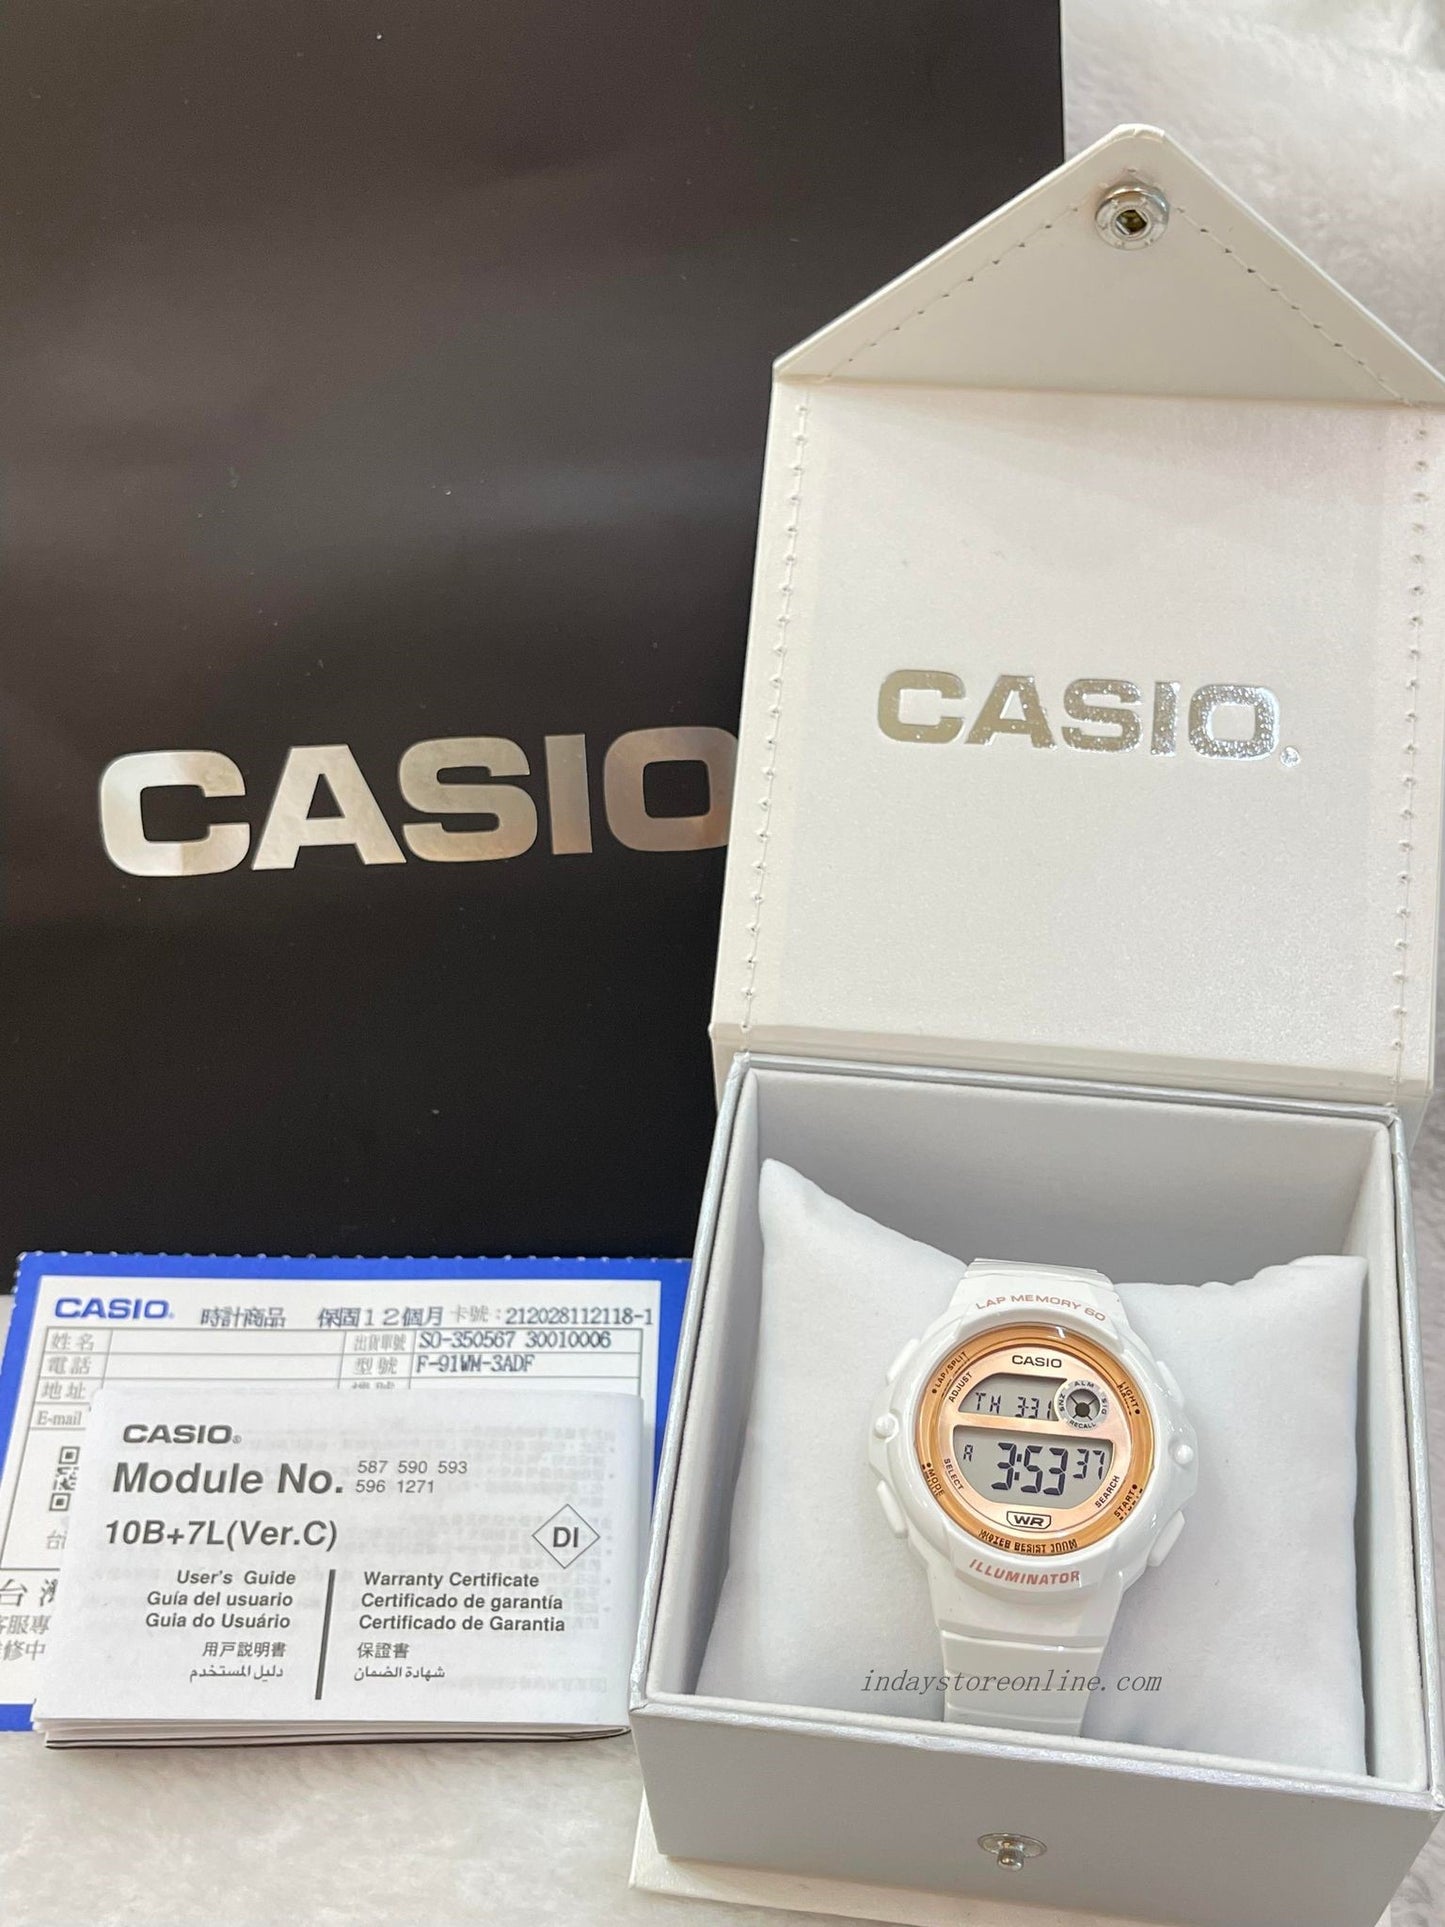 Casio Digital Women's Watch LWS-1200H-7A2 Digital Sporty Design Resin Band Resin Glass